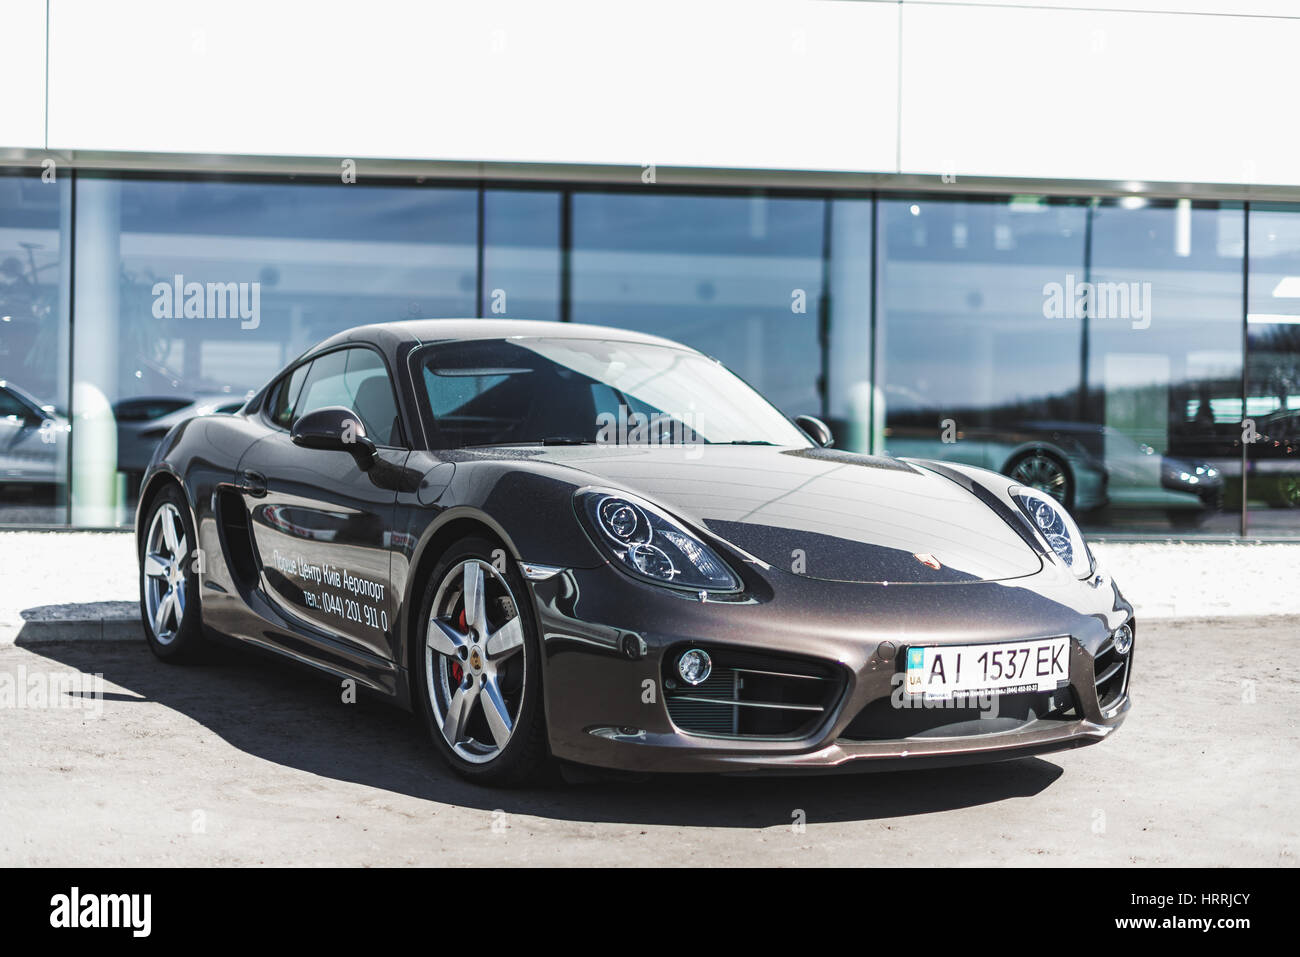 Kyiv, Ukraine - April 4th, 2014: Photoshoot of Porsche Cayman near automotive center 'Porsche Center Kyiv Airport' Stock Photo